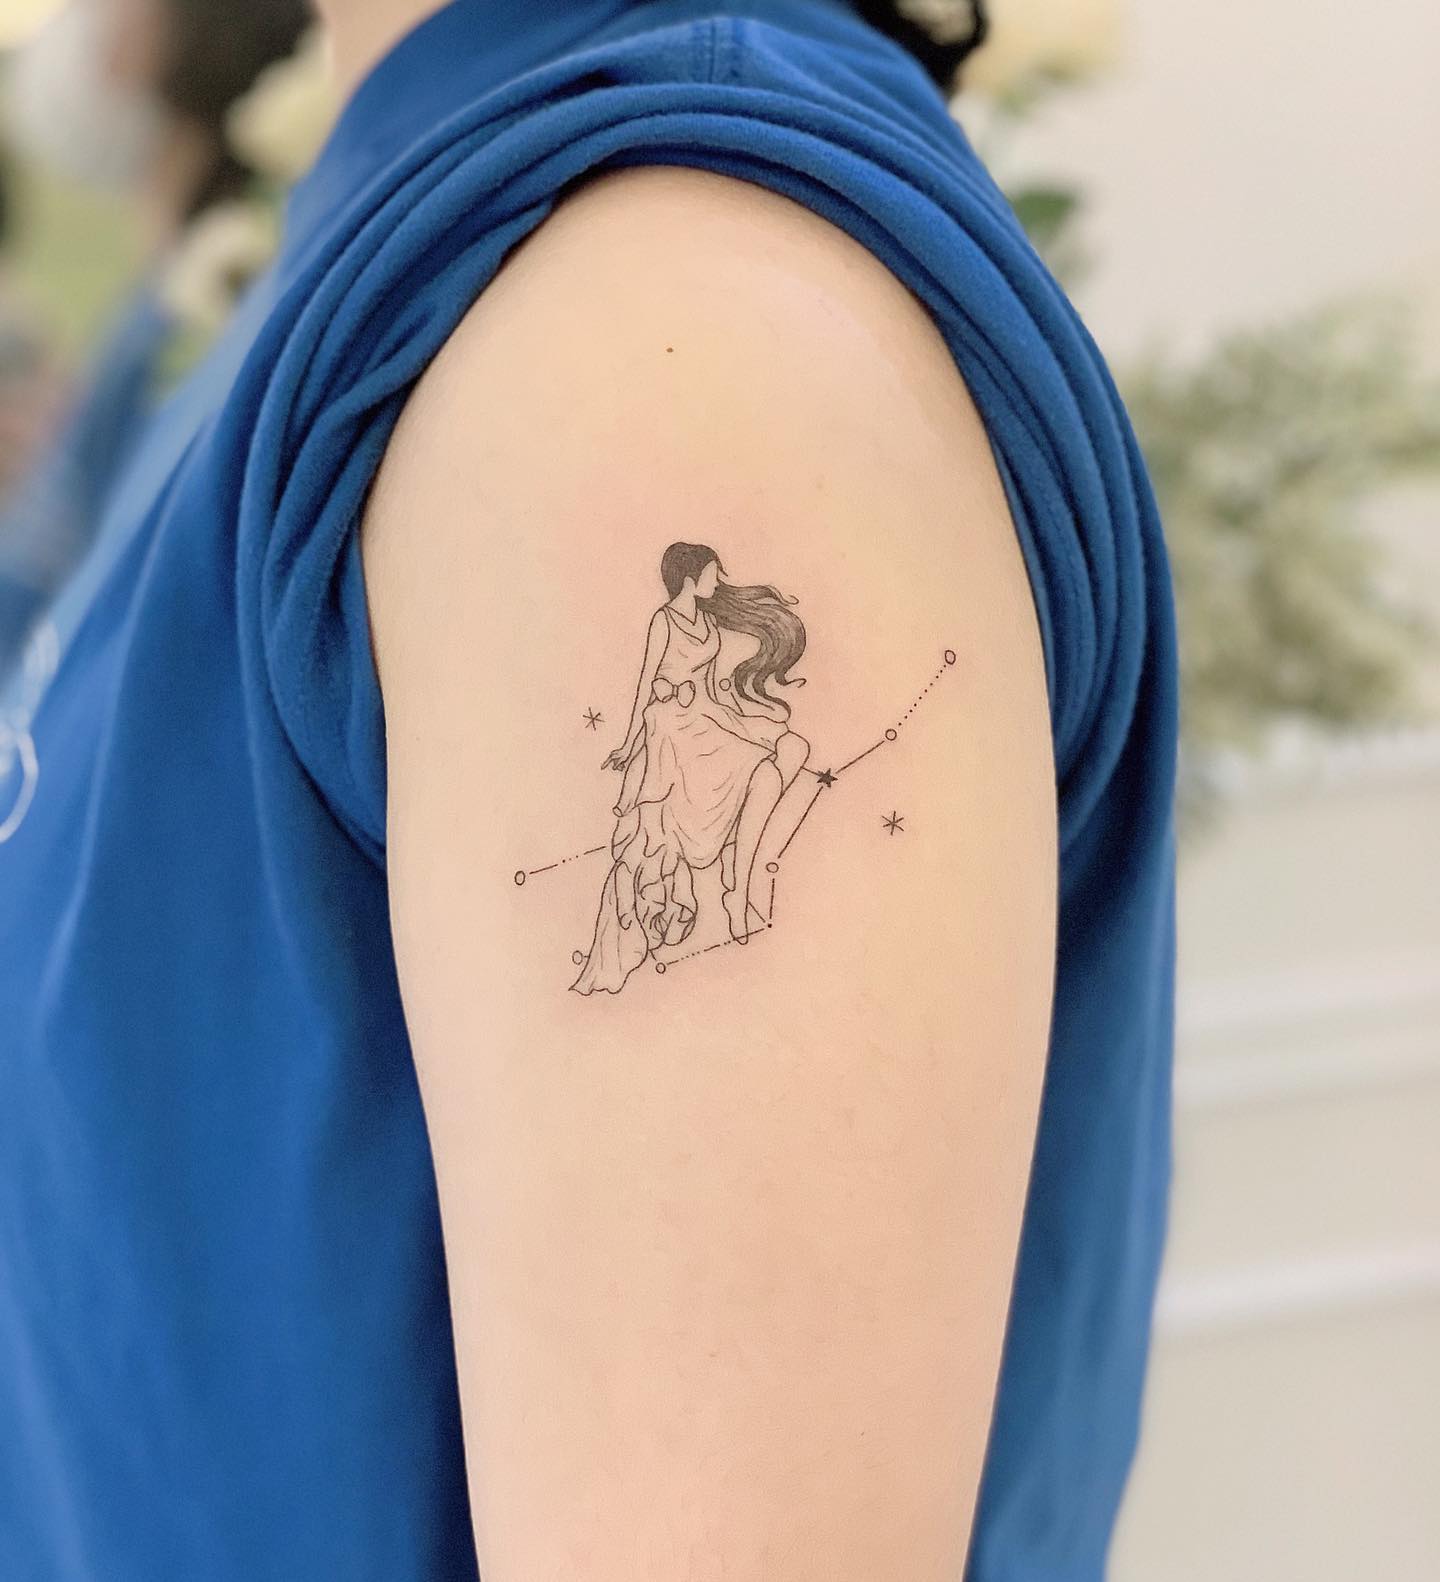 Virgo lady and Virgo constellation tattoo on the upper arm